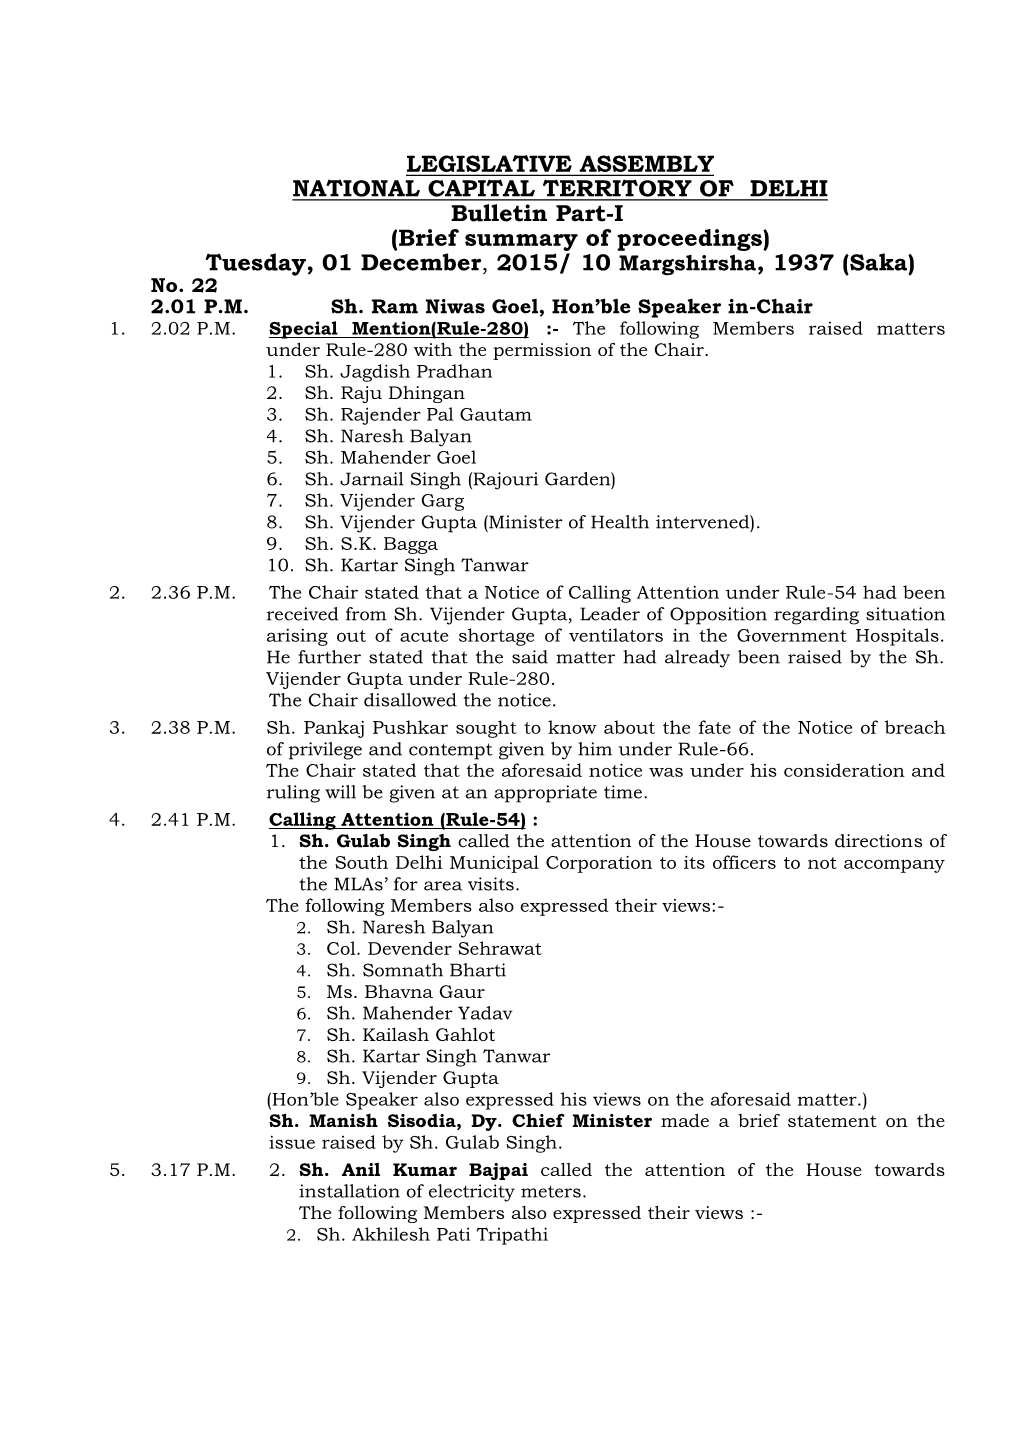 LEGISLATIVE ASSEMBLY NATIONAL CAPITAL TERRITORY of DELHI Bulletin Part-I (Brief Summary of Proceedings) Tuesday, 01 December, 2015/ 10 Margshirsha, 1937 (Saka) No